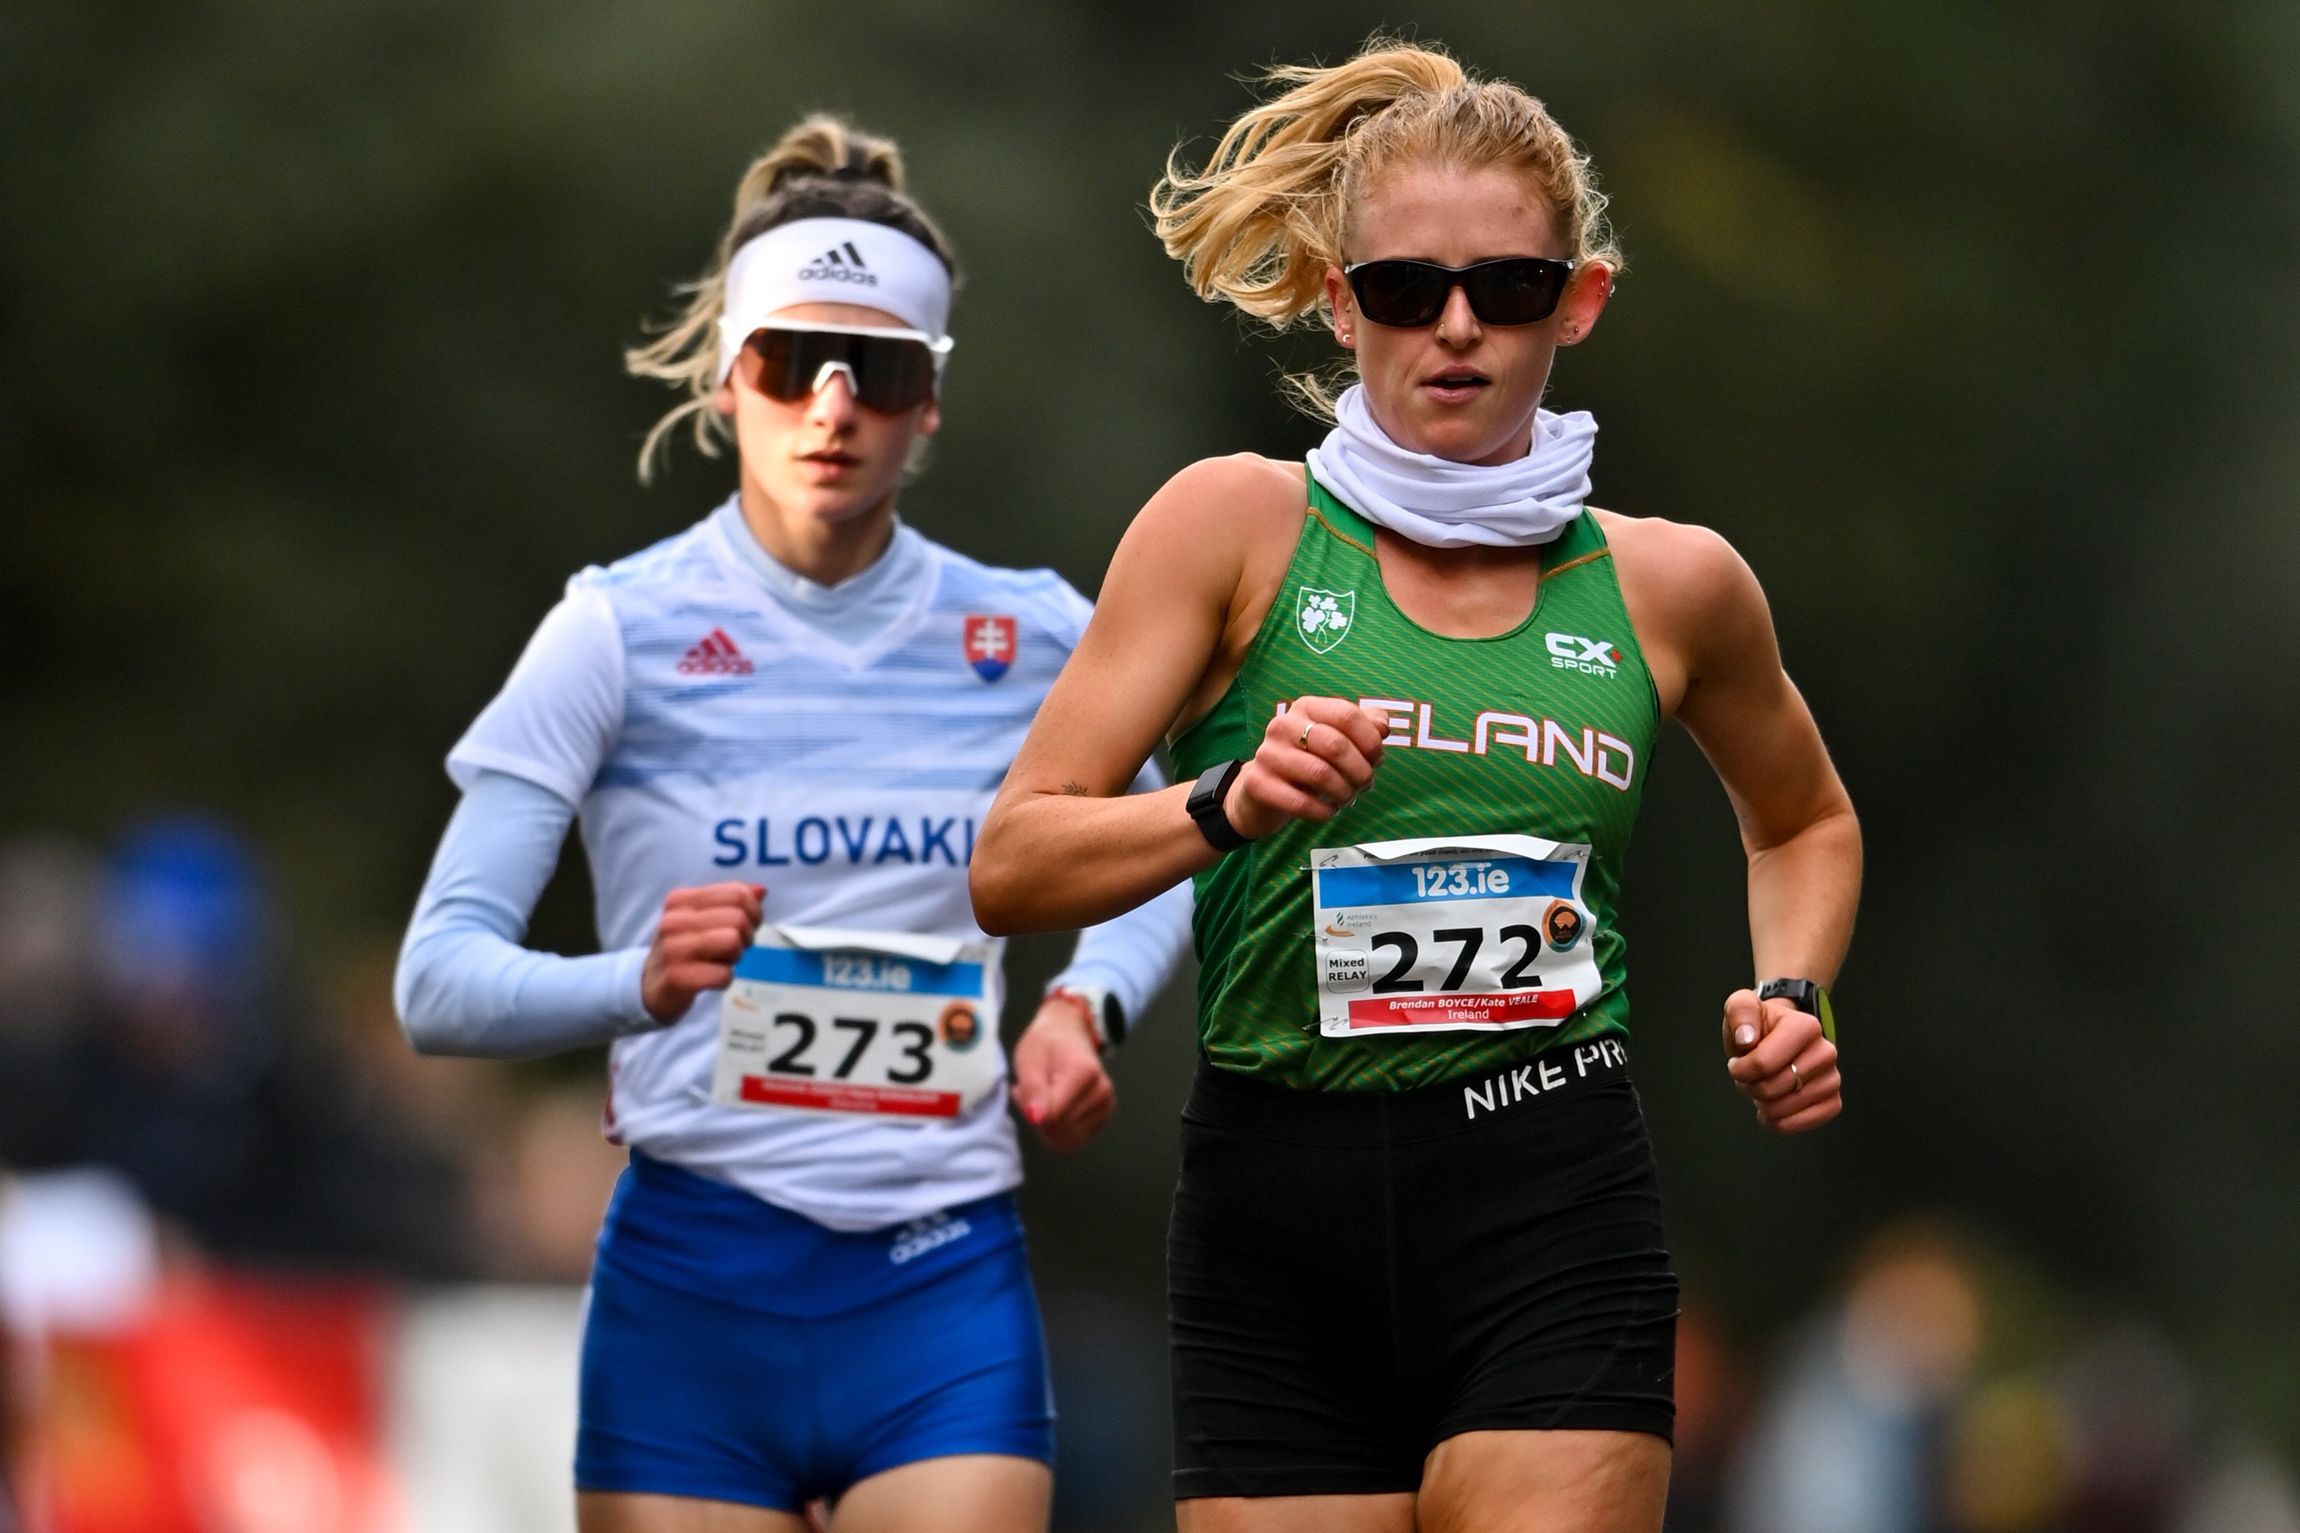 Hana Burzalova poised to overtake Kate Veale in the marathon race walk mixed relay in Dublin